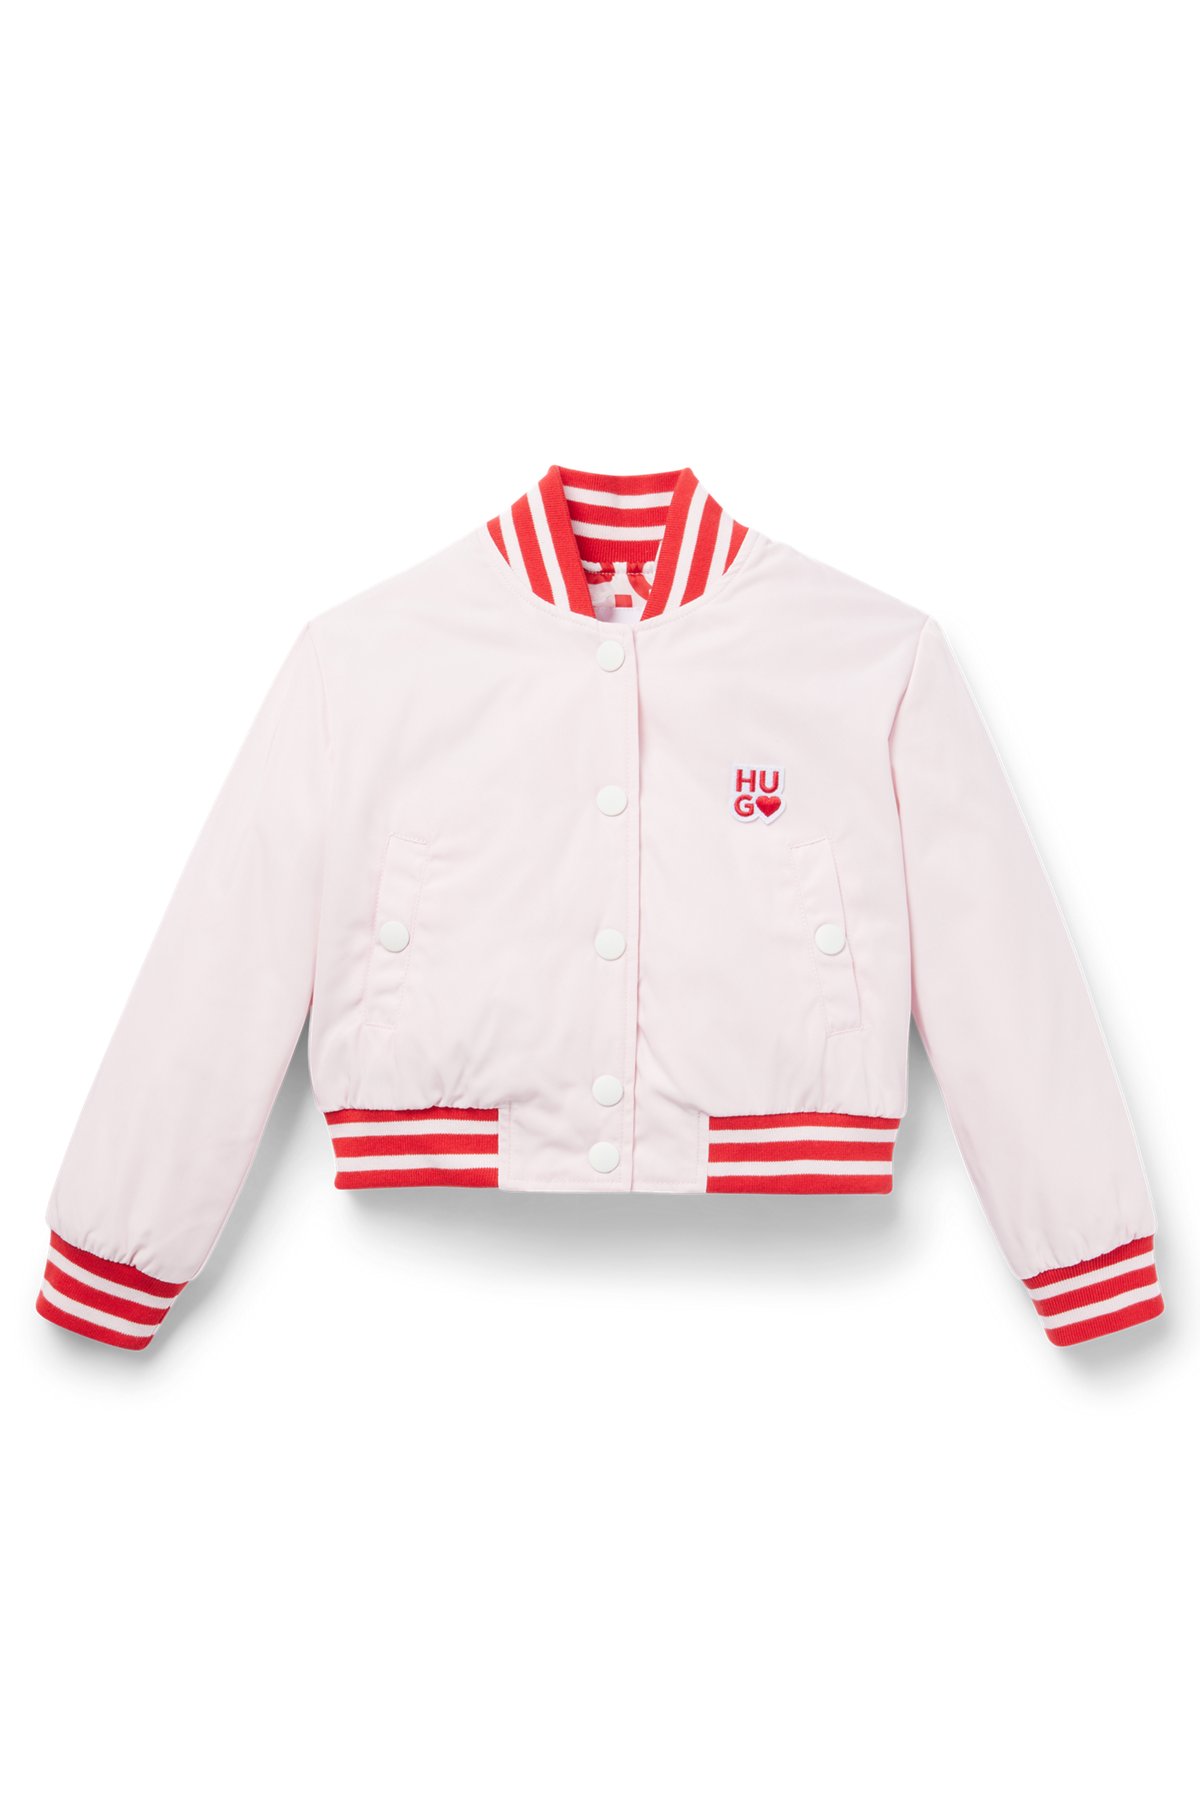 Kids' bomber jacket with embroidered logo details, light pink